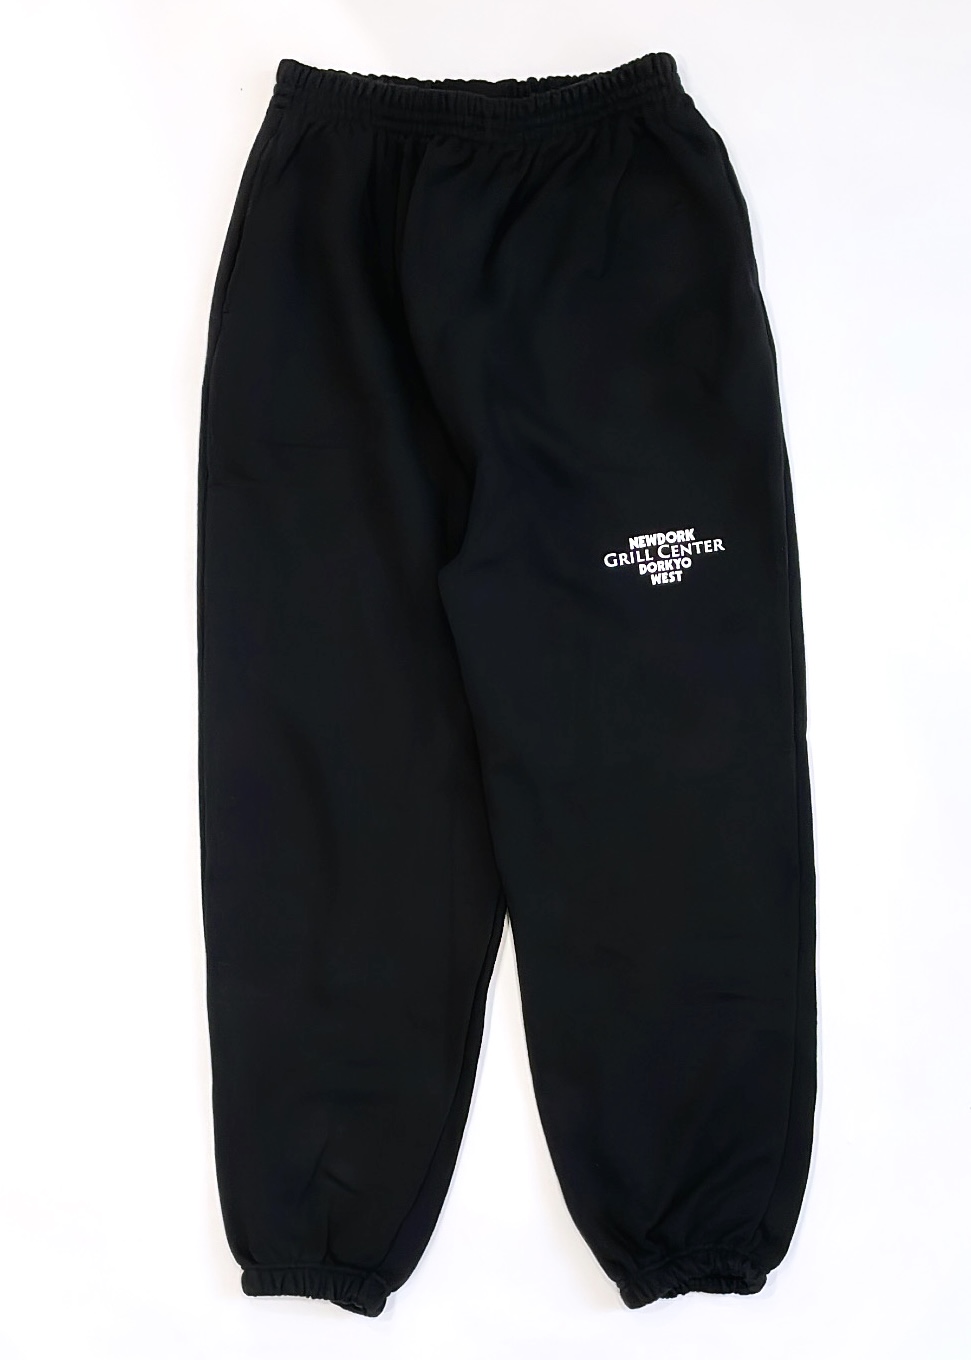 画像1: EMPIRE Co.,Ltd Merch "GRILL CENTER" Sweat Pant (Black) [¥7,200+税]